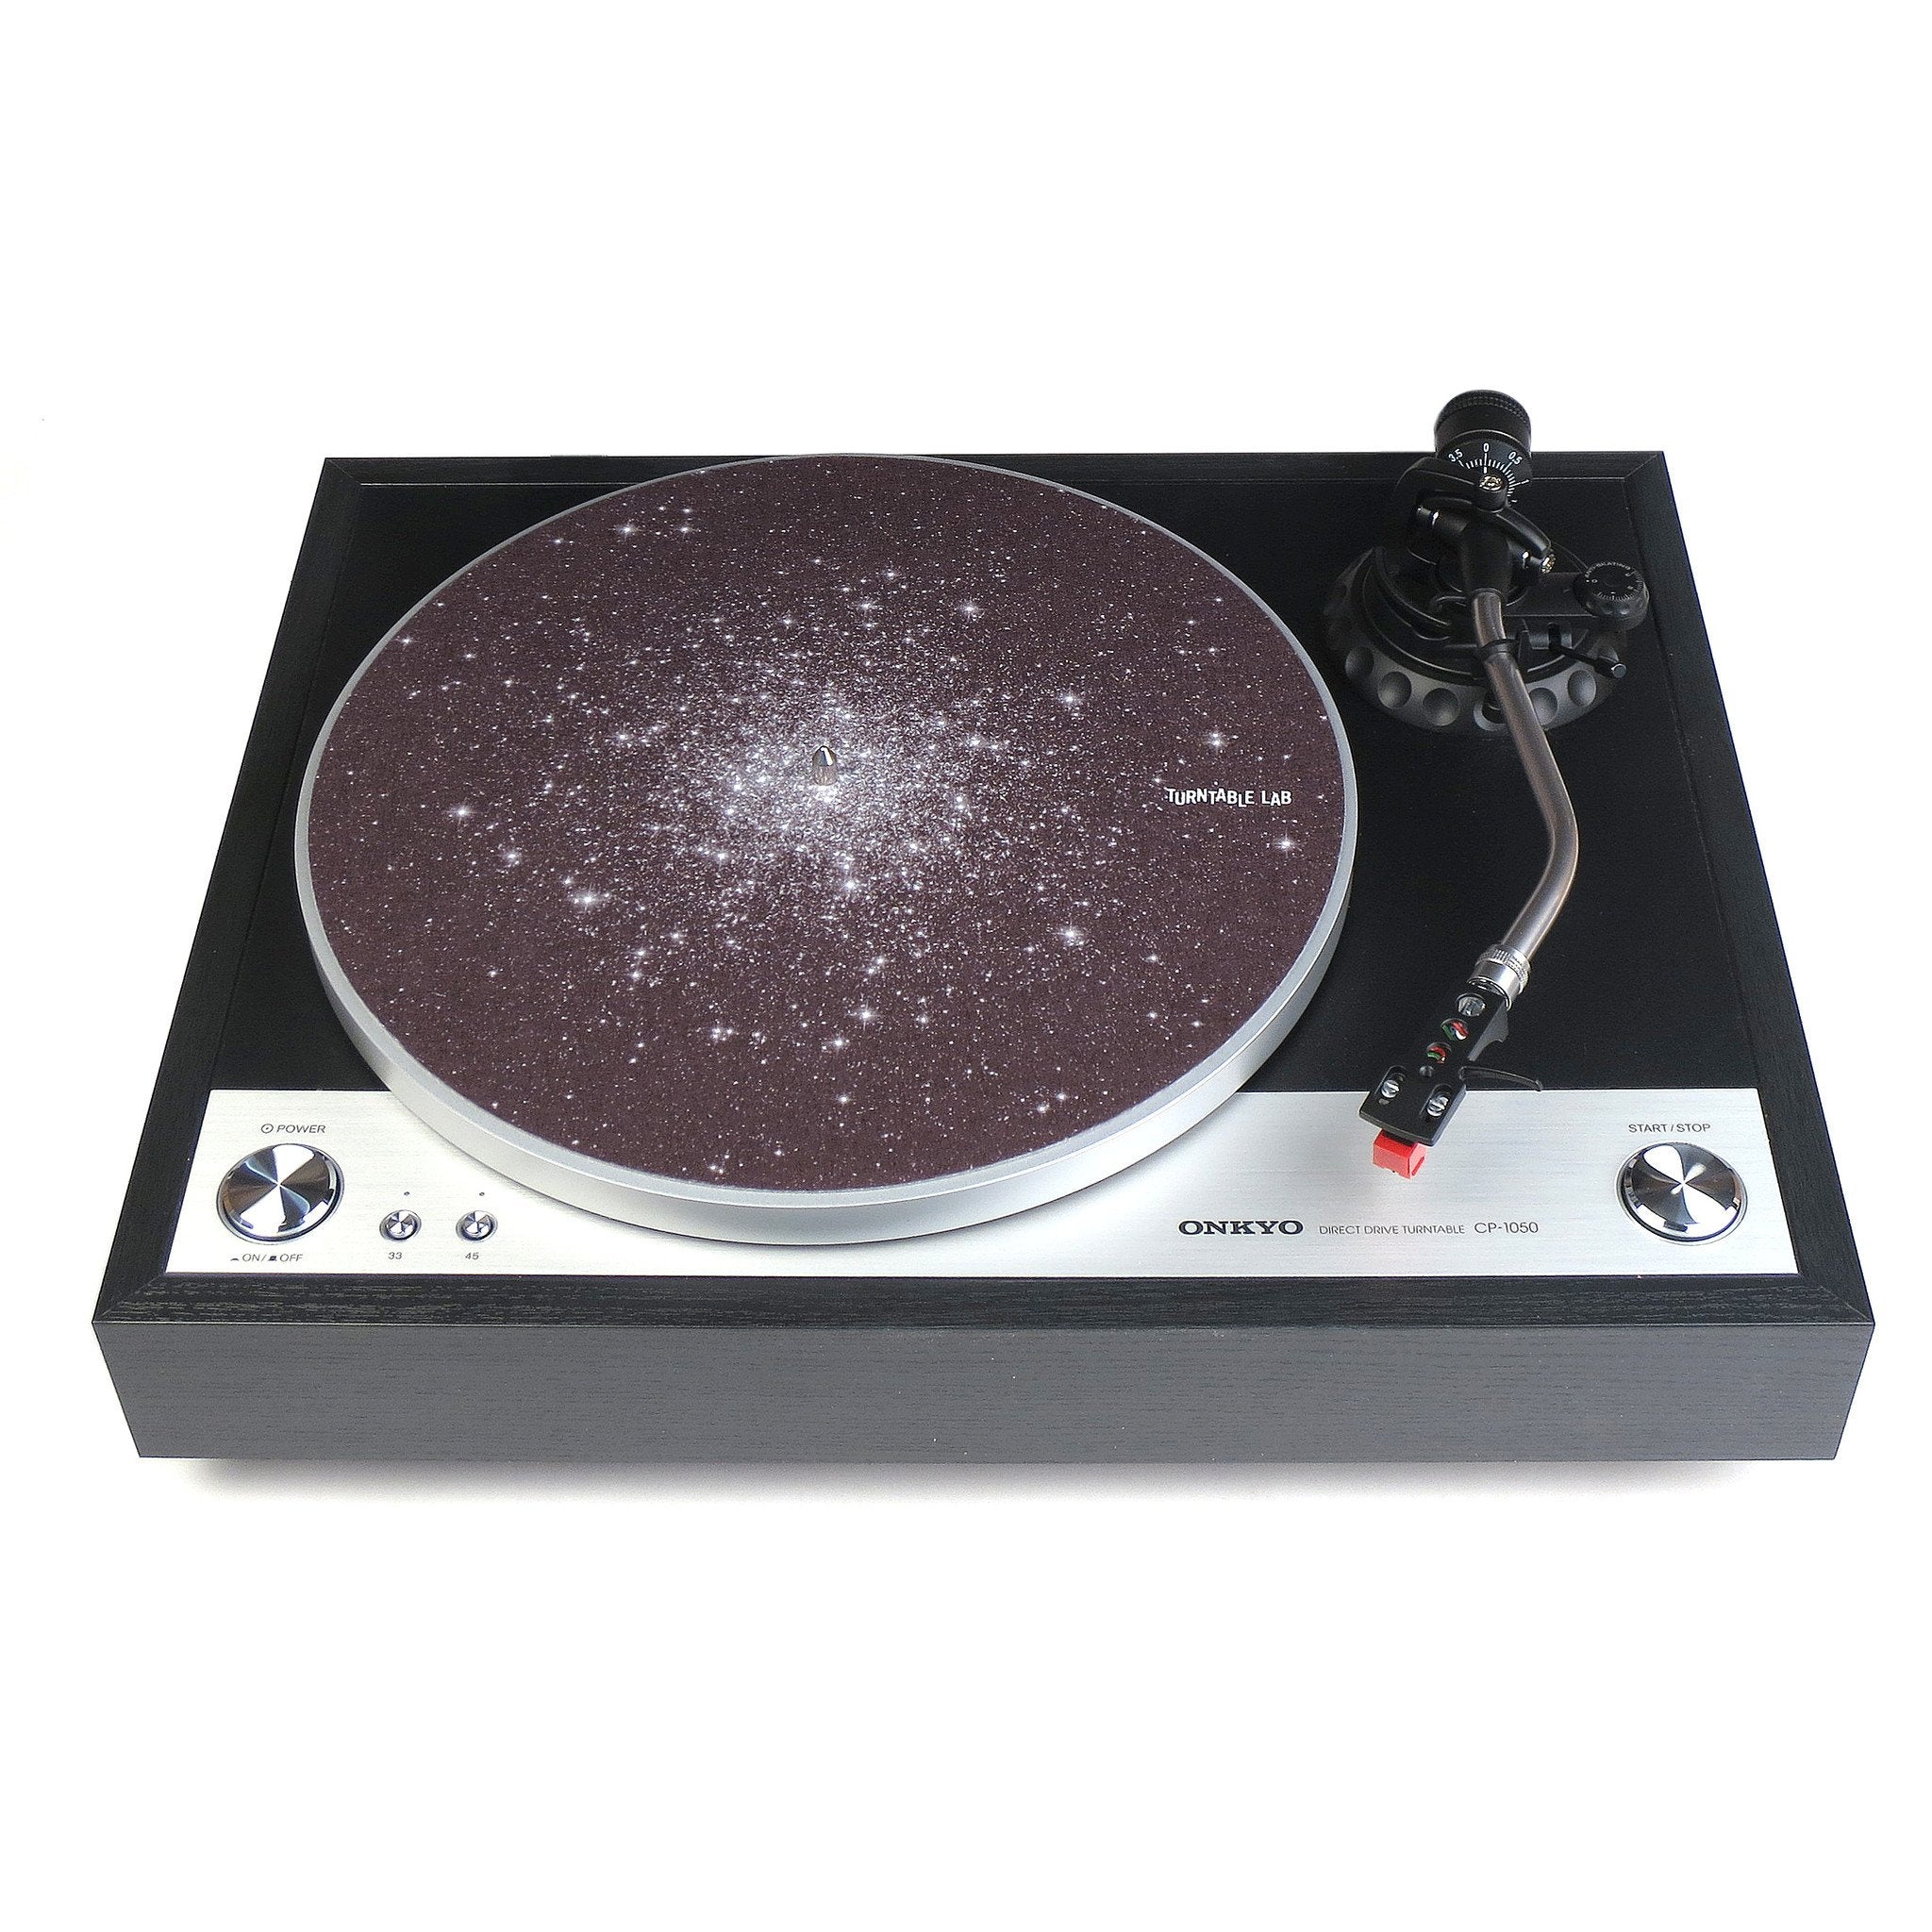 Turntable Lab: Spacemat Record Slipmat